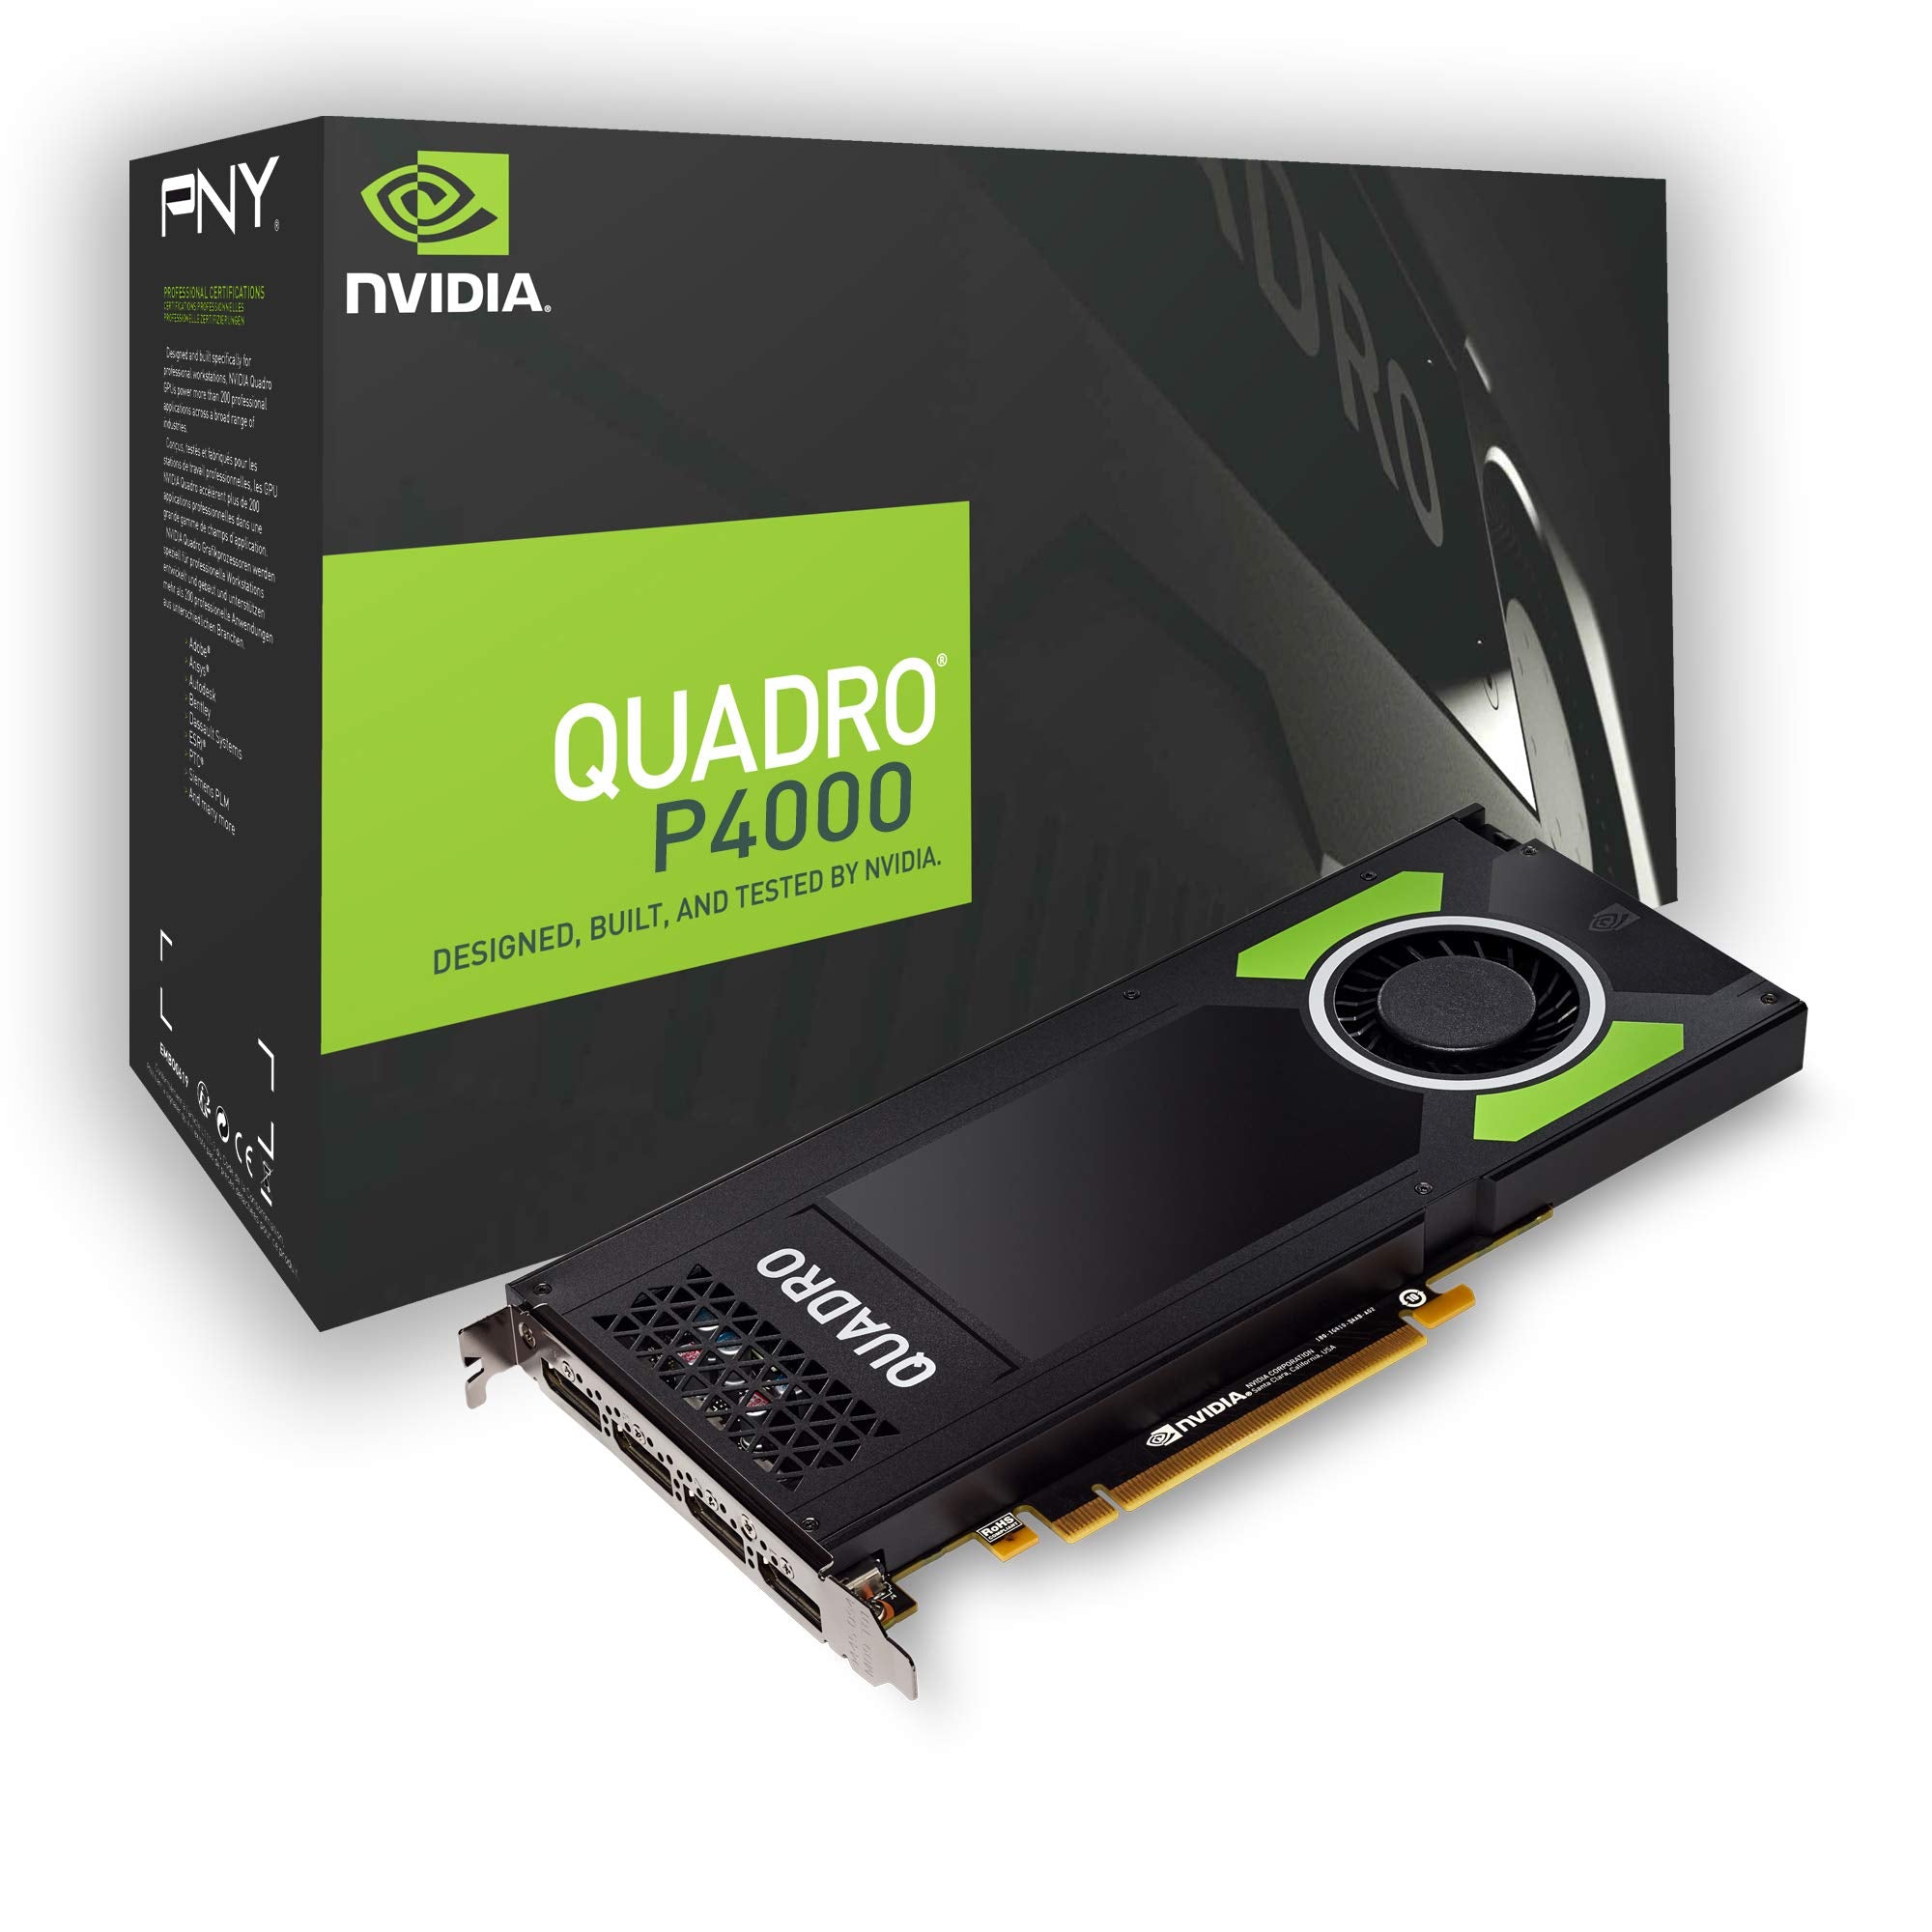 PNY NVIDIA Quadro P4000 4x DP 8 GB GDDR5 PCI Express Professional Graphic Card - Black (Refurbished)